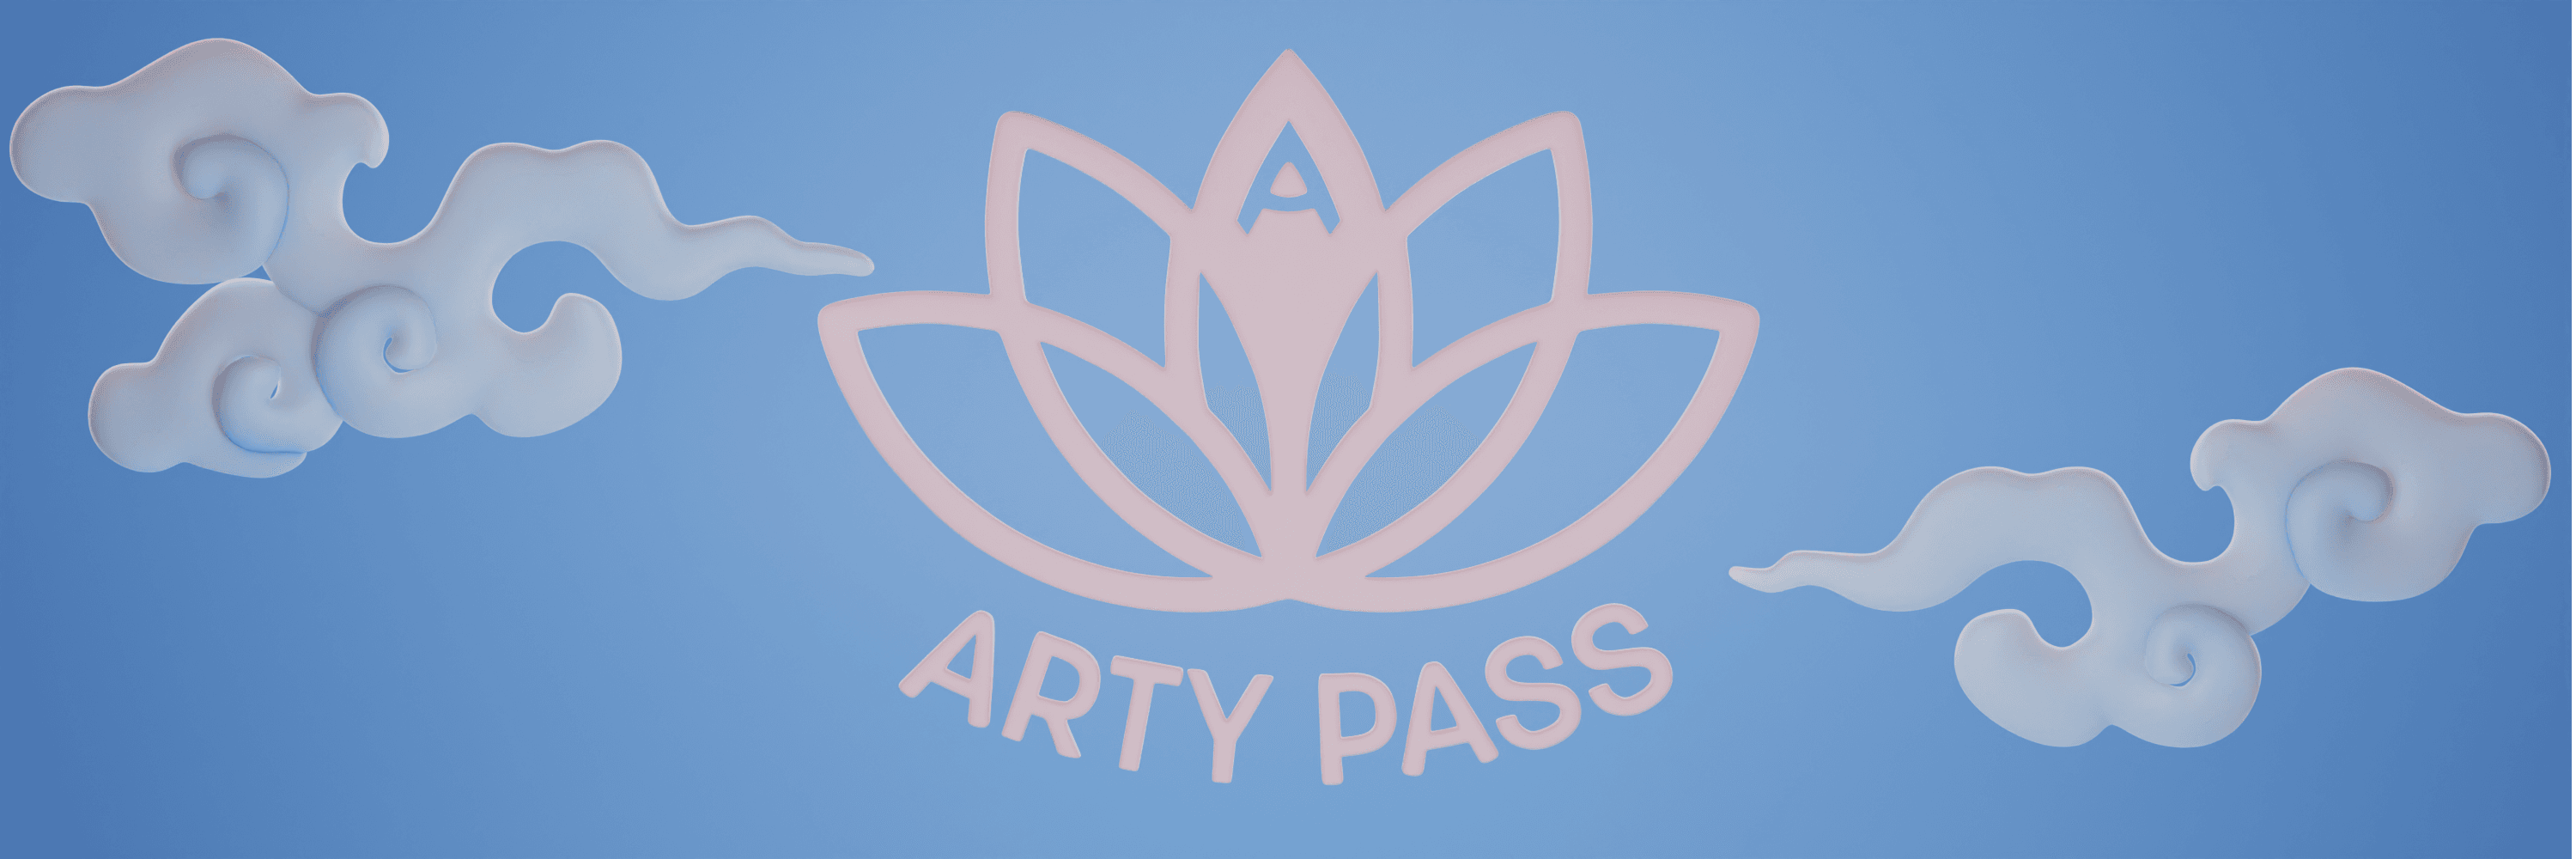 Arty Pass